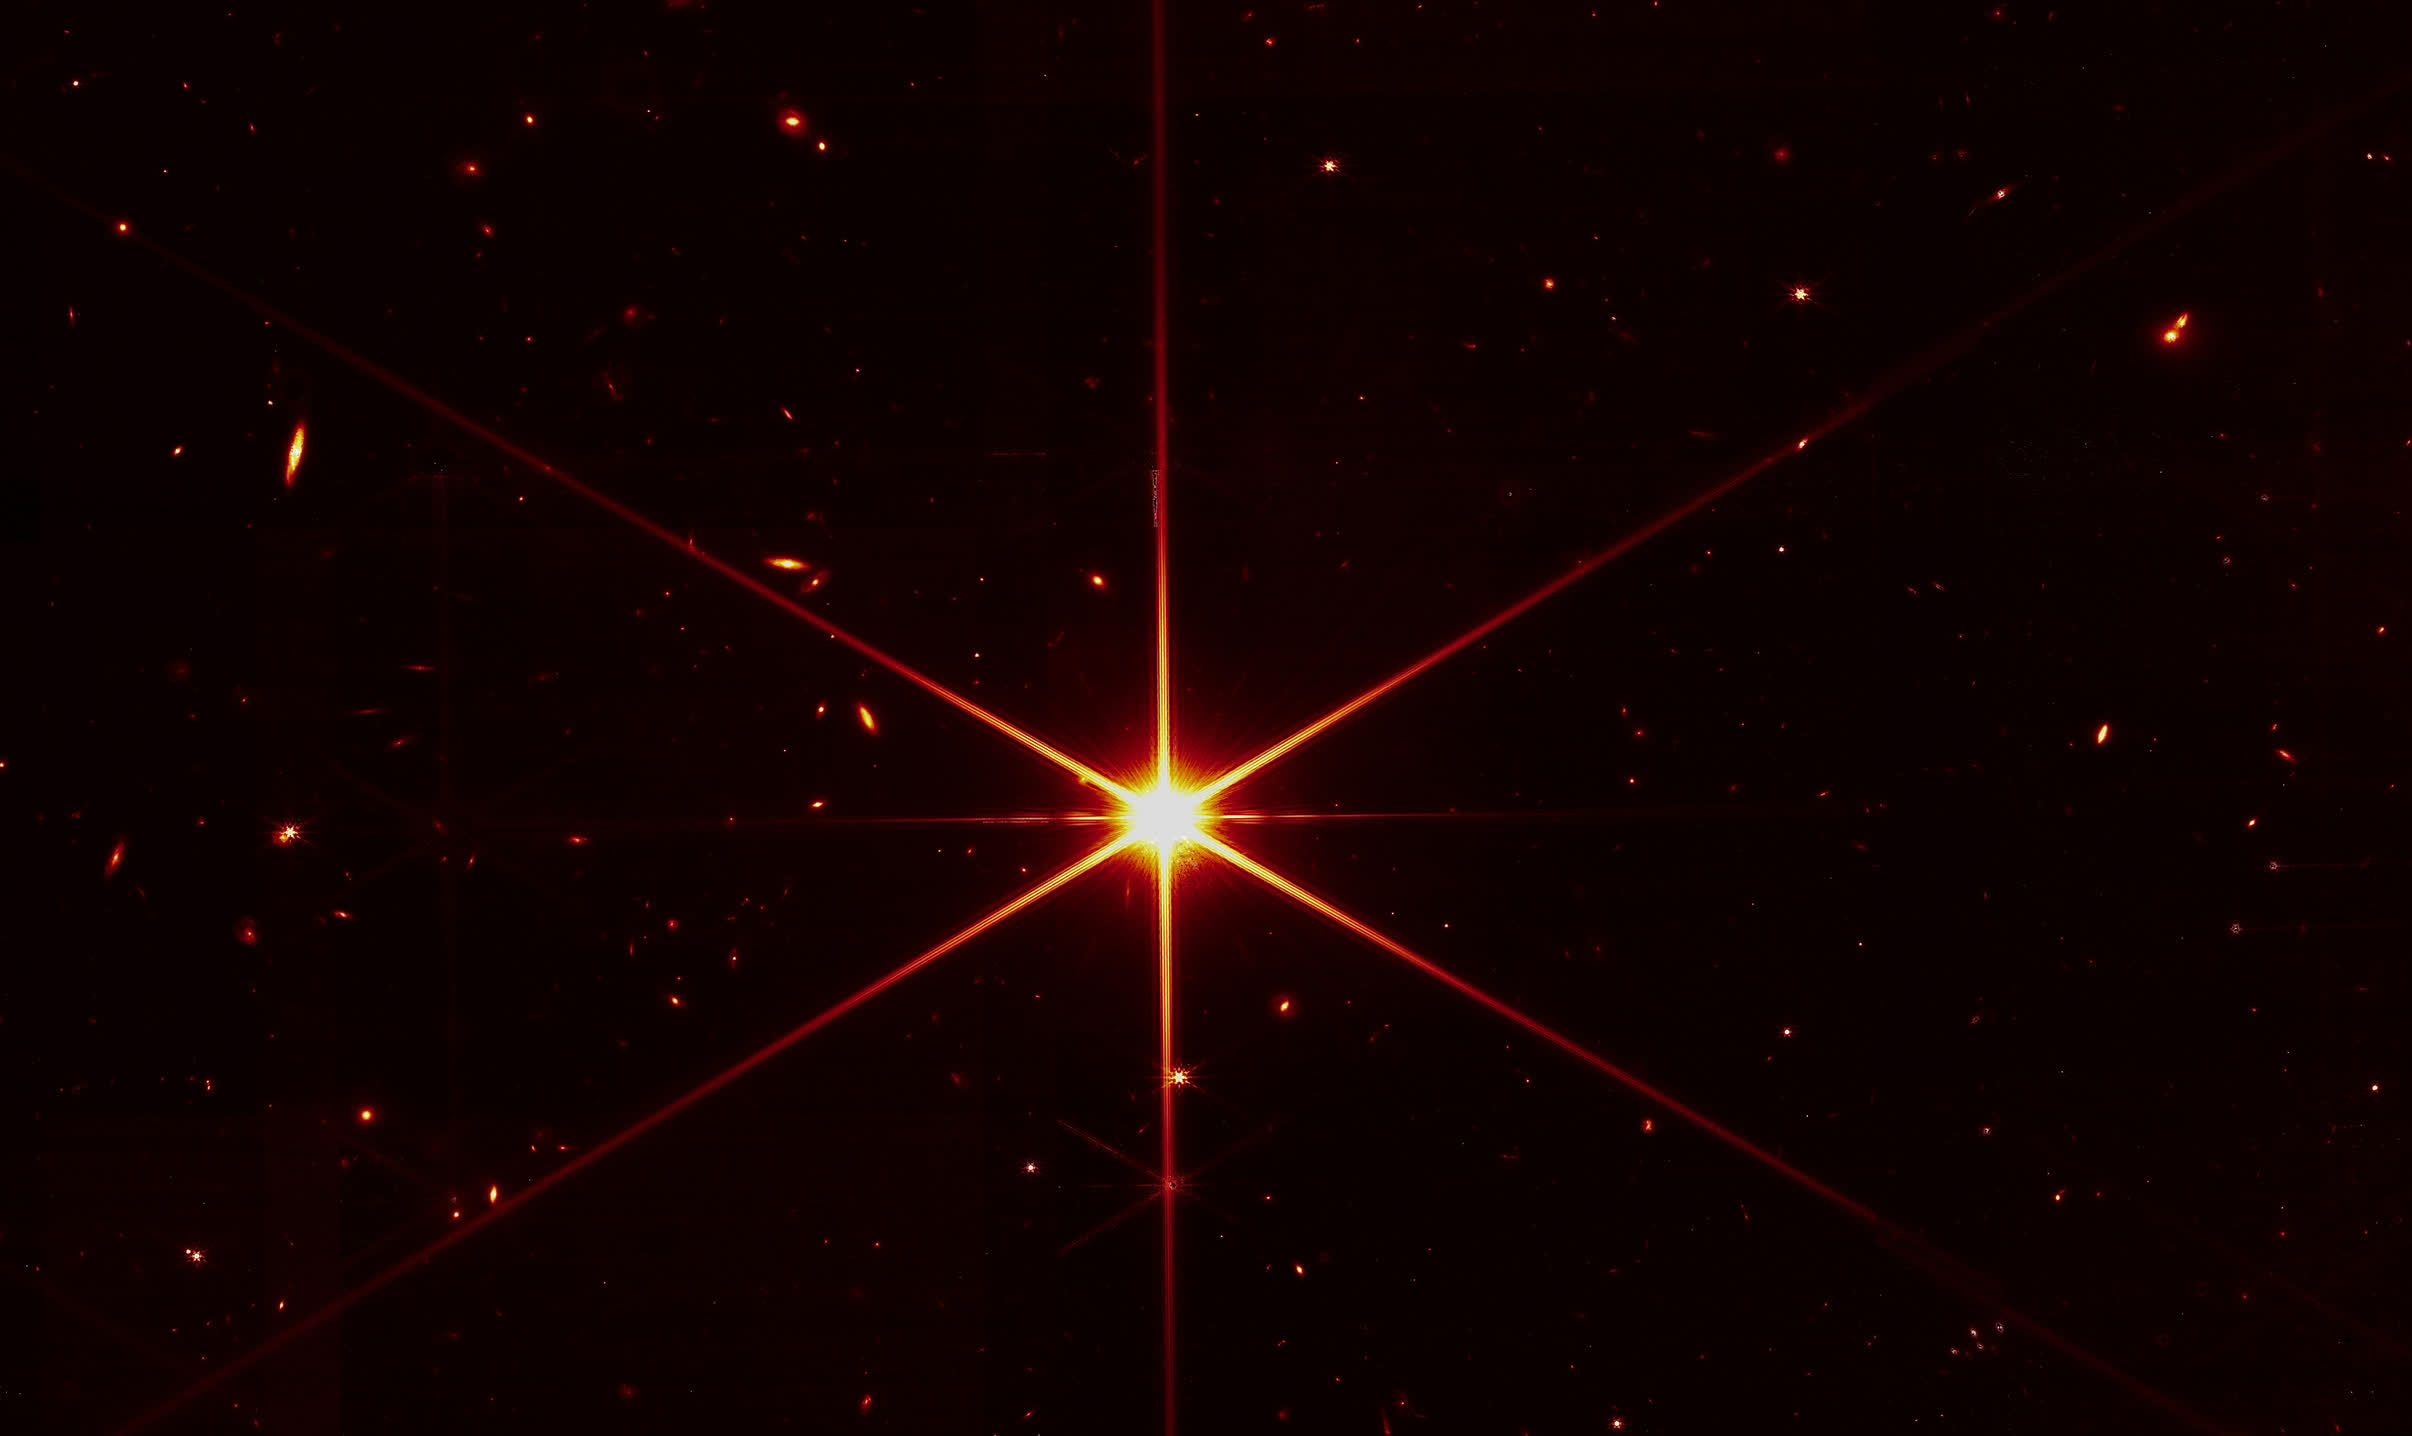 James Webb Space Telescope passes key alignment phase